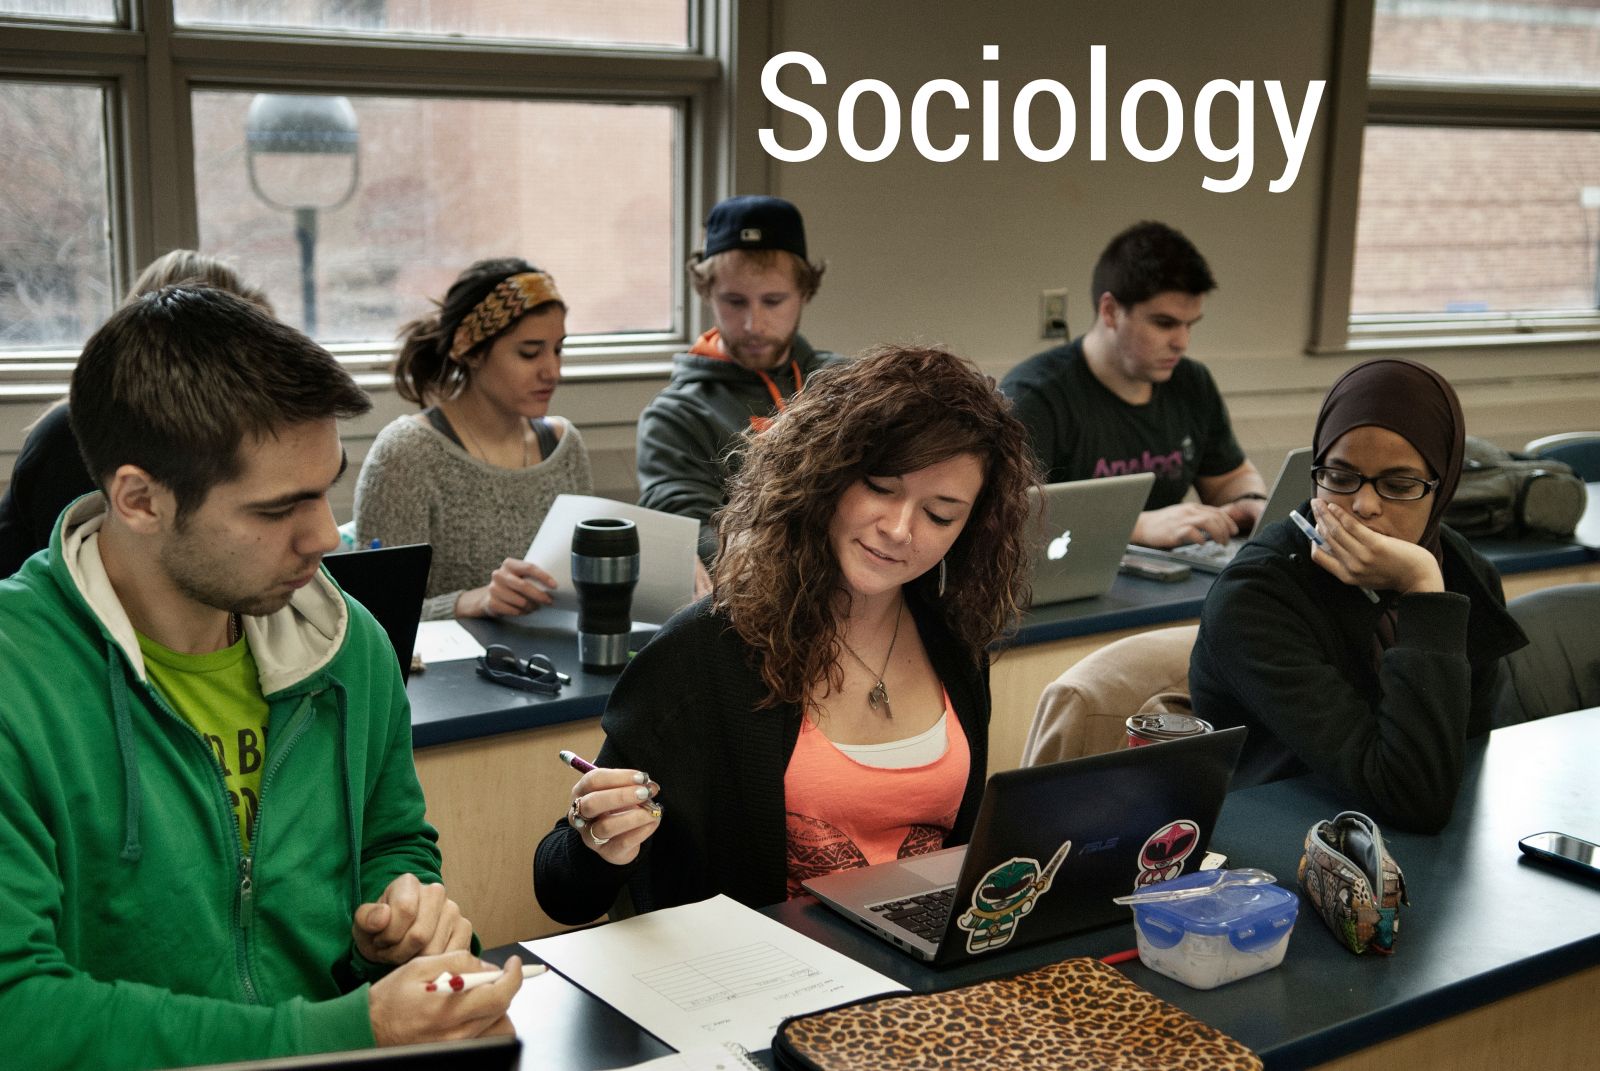 sociology photo essay